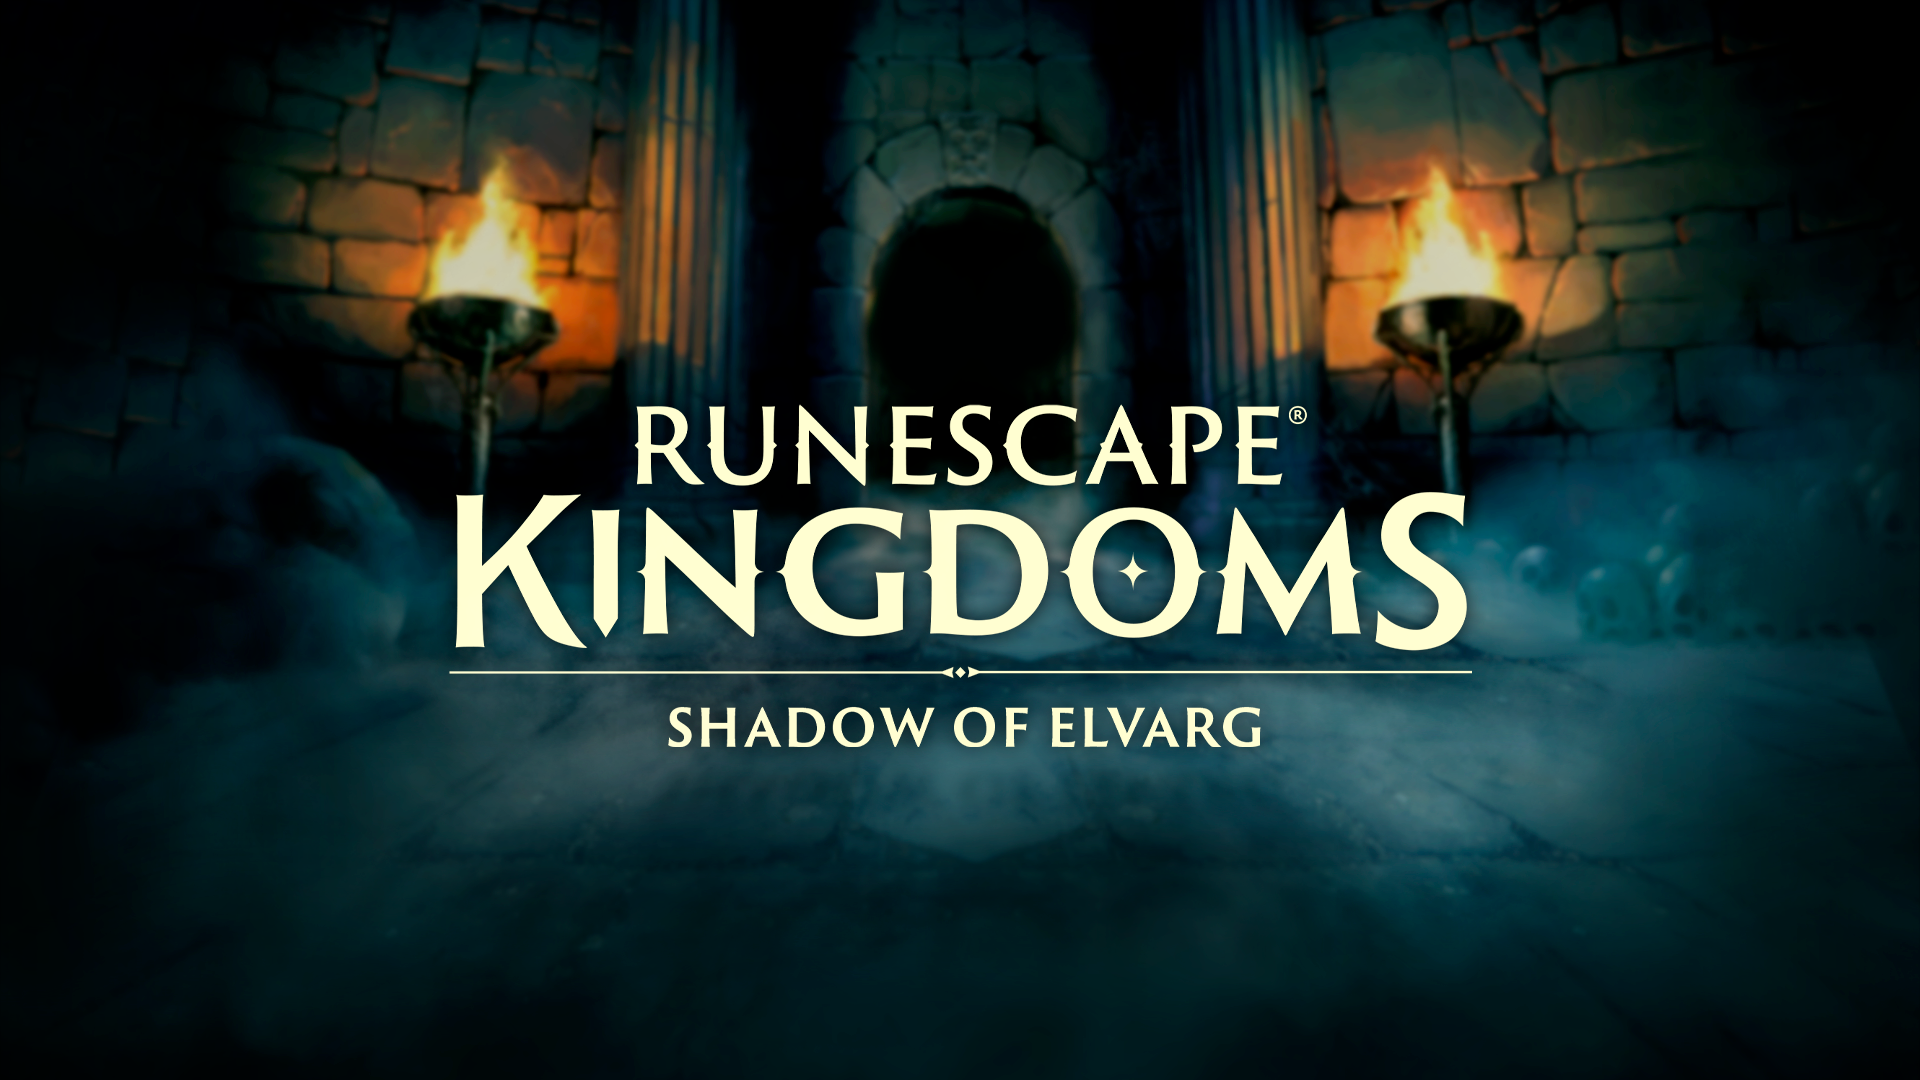 RuneScape board game preview – a tabletop nostalgia trip